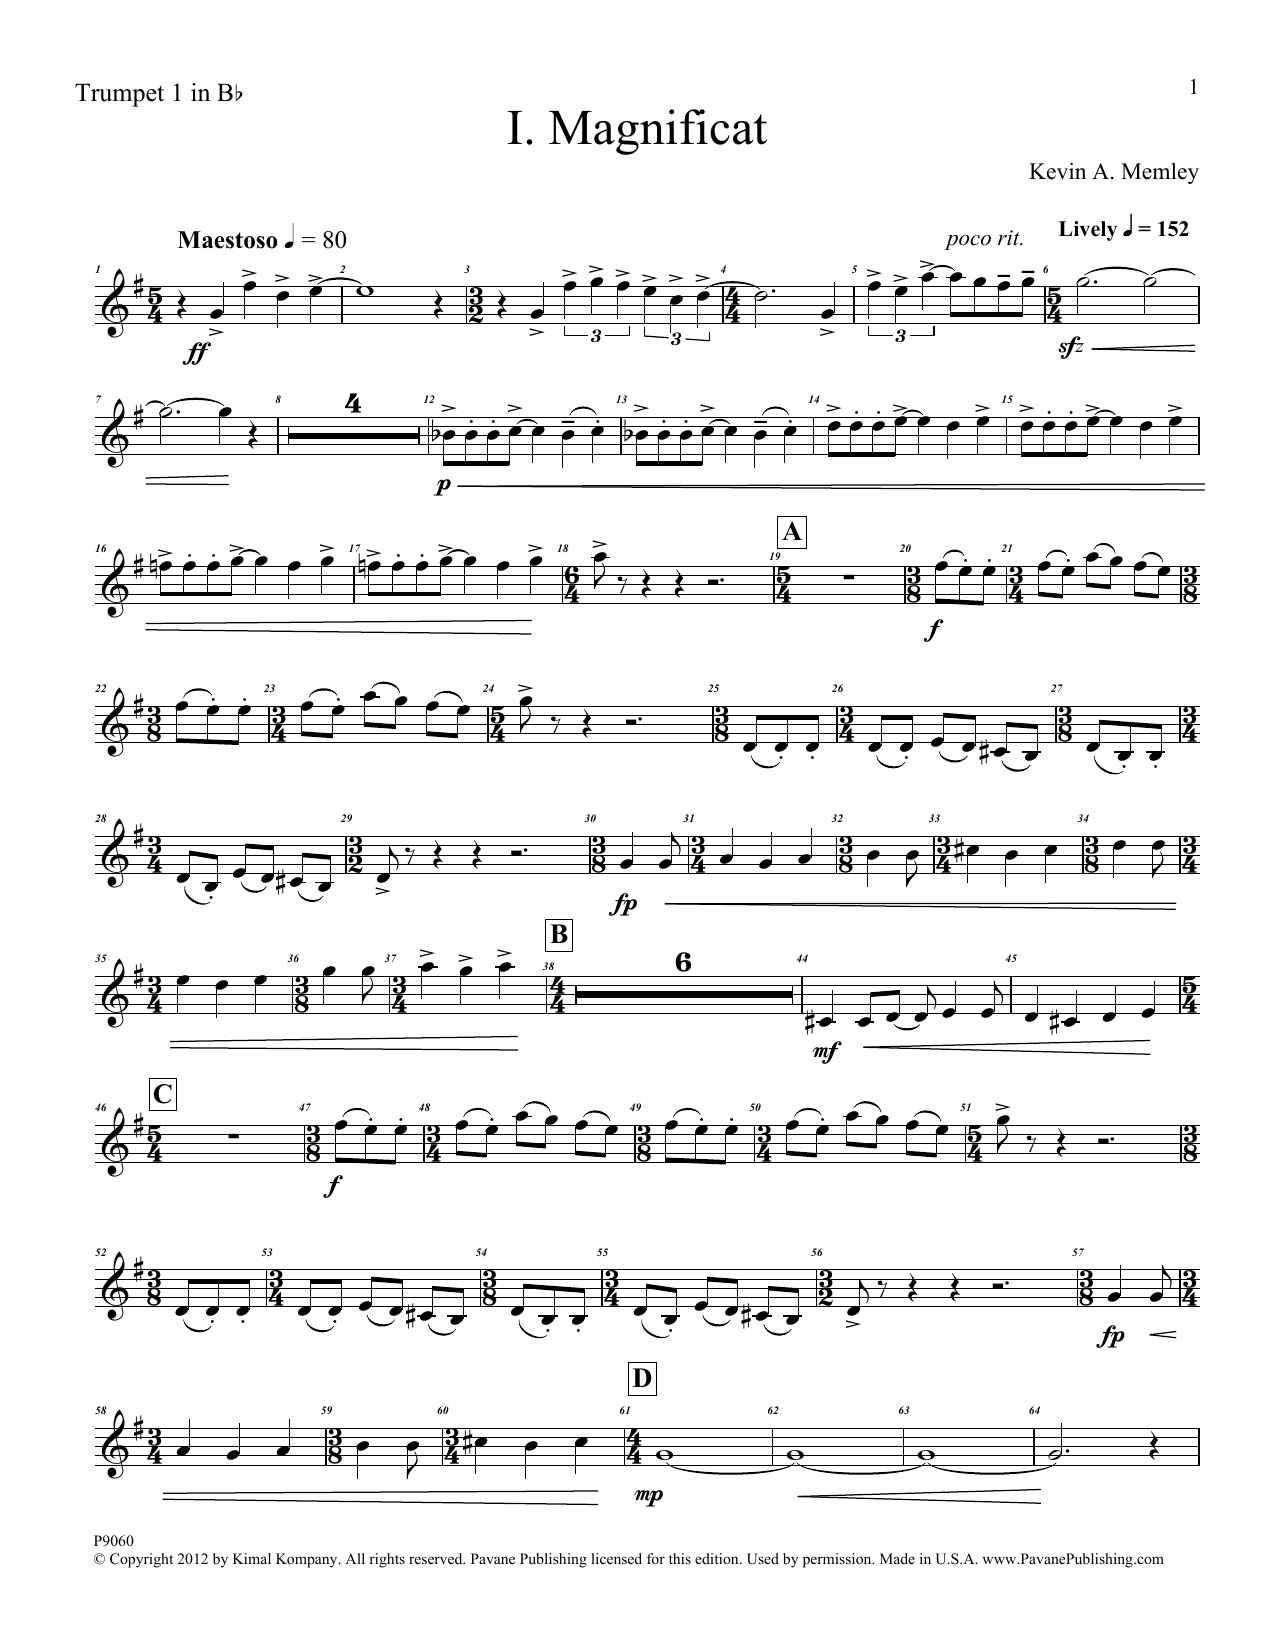 Download Kevin Memley Magnificat (Brass Quintet) (Parts) - Tr Sheet Music